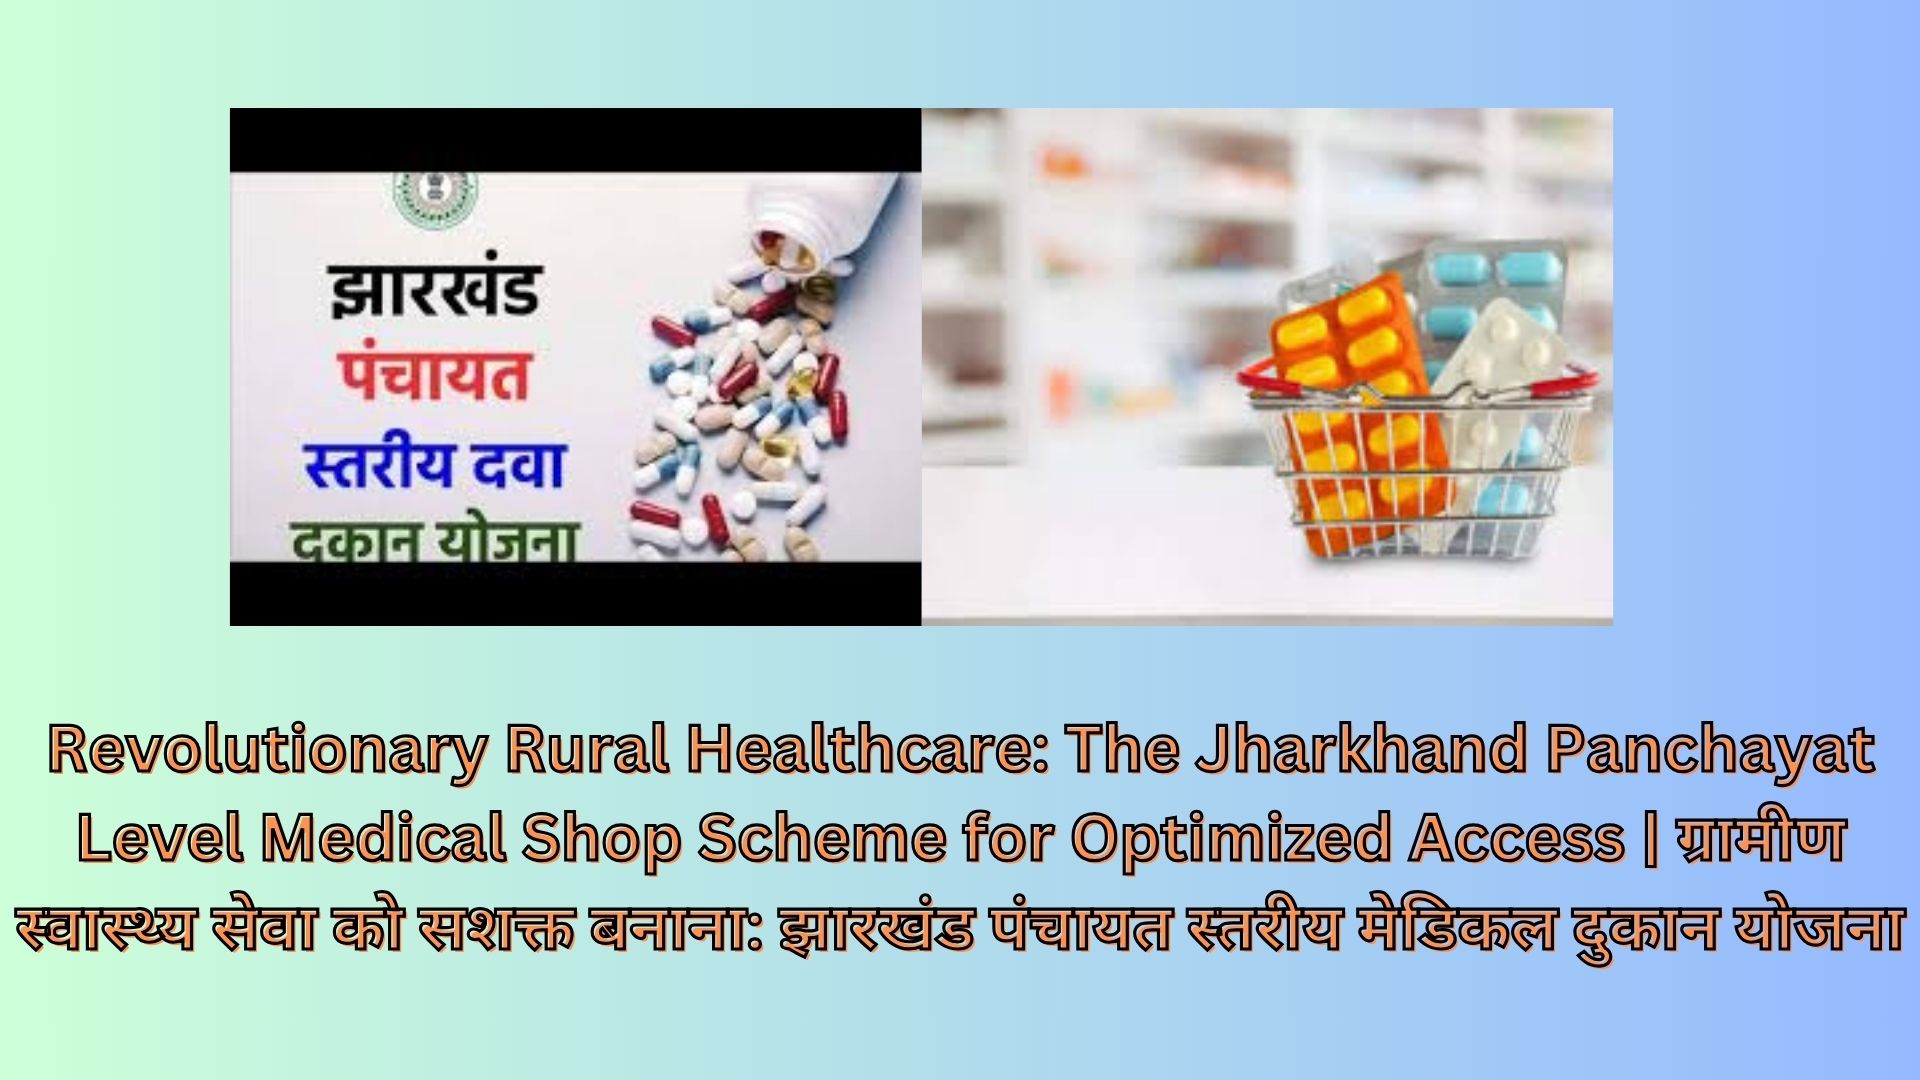 Revolutionary Rural Healthcare: The Jharkhand Panchayat Level Medical Shop Scheme for Optimized Access | ग्रामीण स्वास्थ्य सेवा को सशक्त बनाना: झारखंड पंचायत स्तरीय मेडिकल दुकान योजना